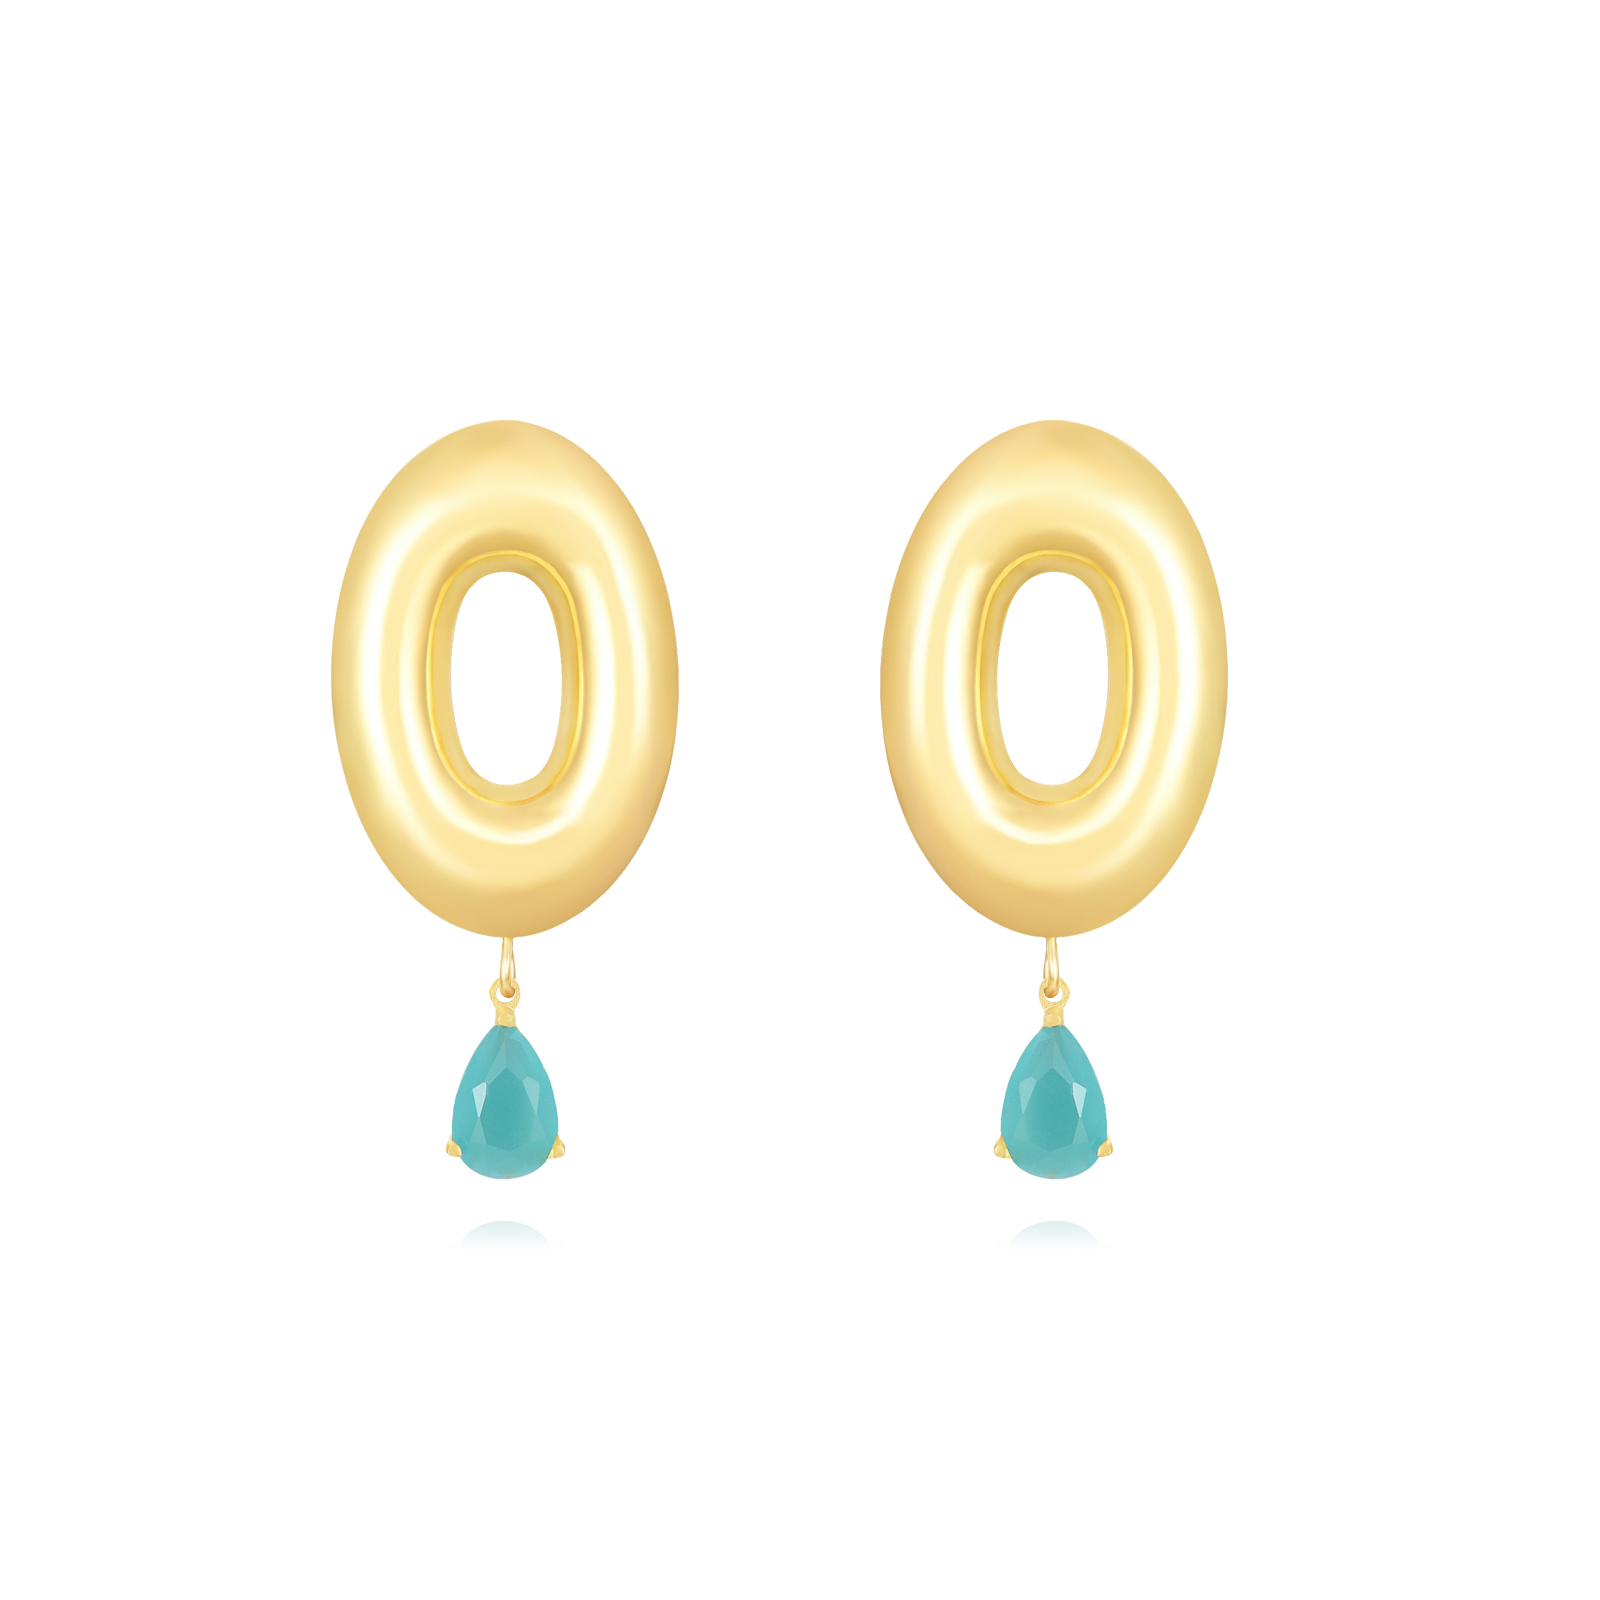 Steel Stone Earrings Oval Earrings with Mineral Teardrop - Glass Chalcedony - 44mm - Gold Color